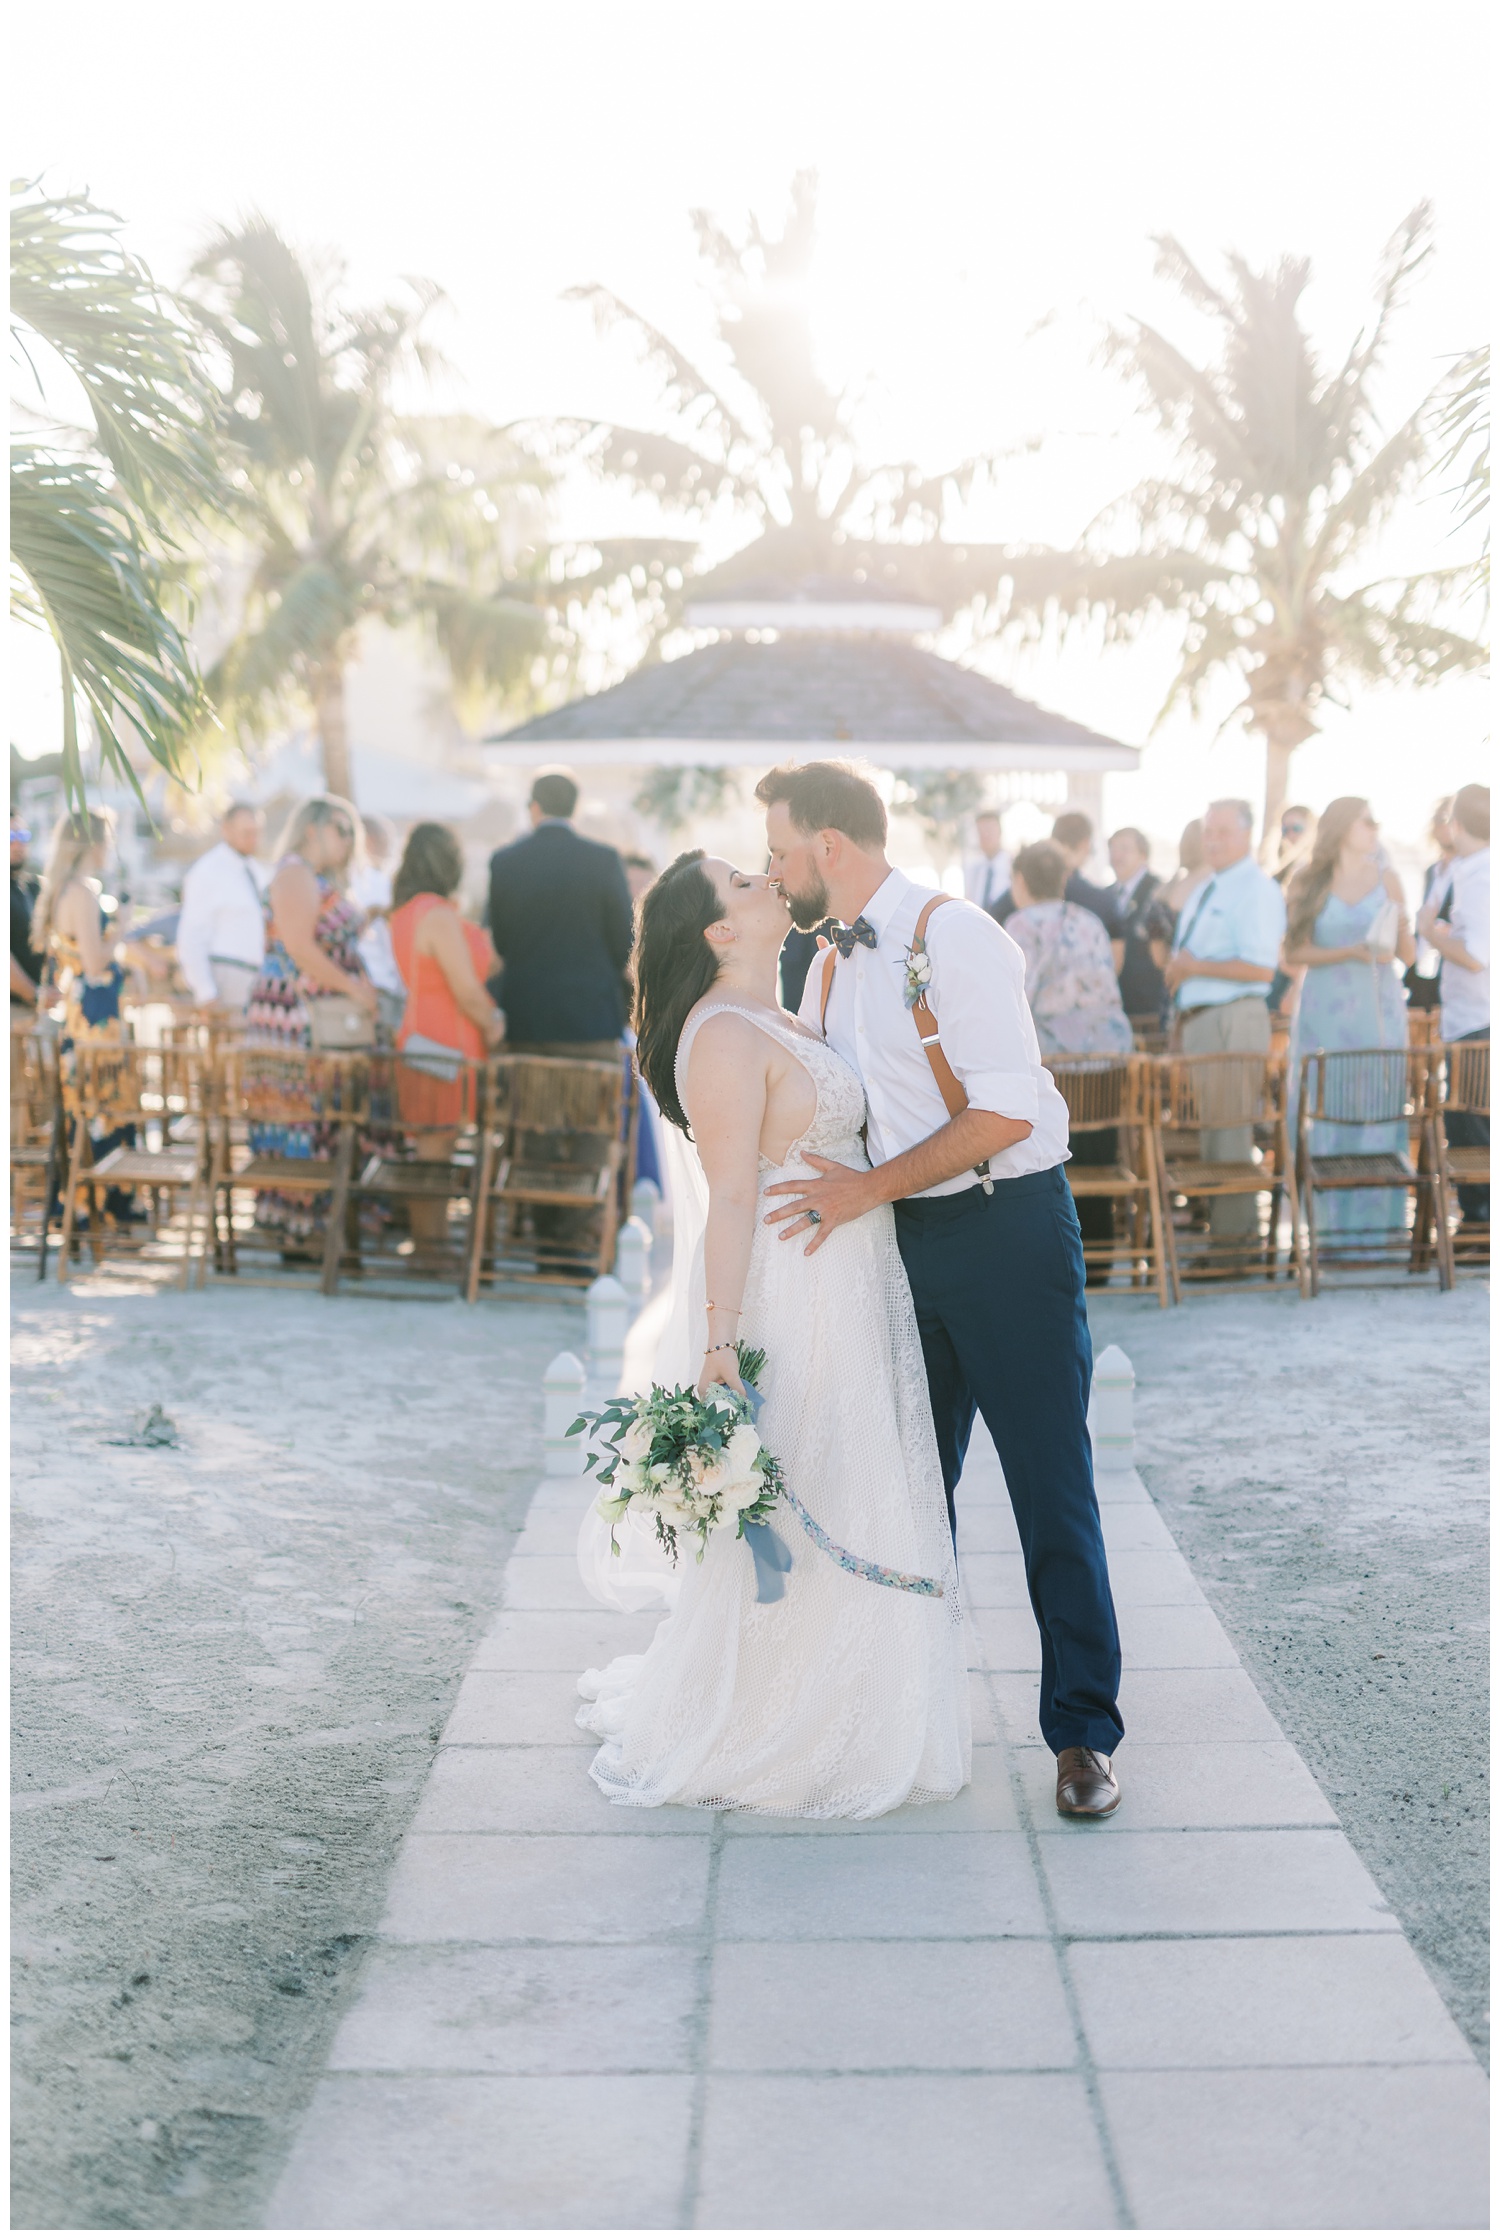 Wedding ceremony at Isla Del Sol in St. Petersburg Beach, Florida